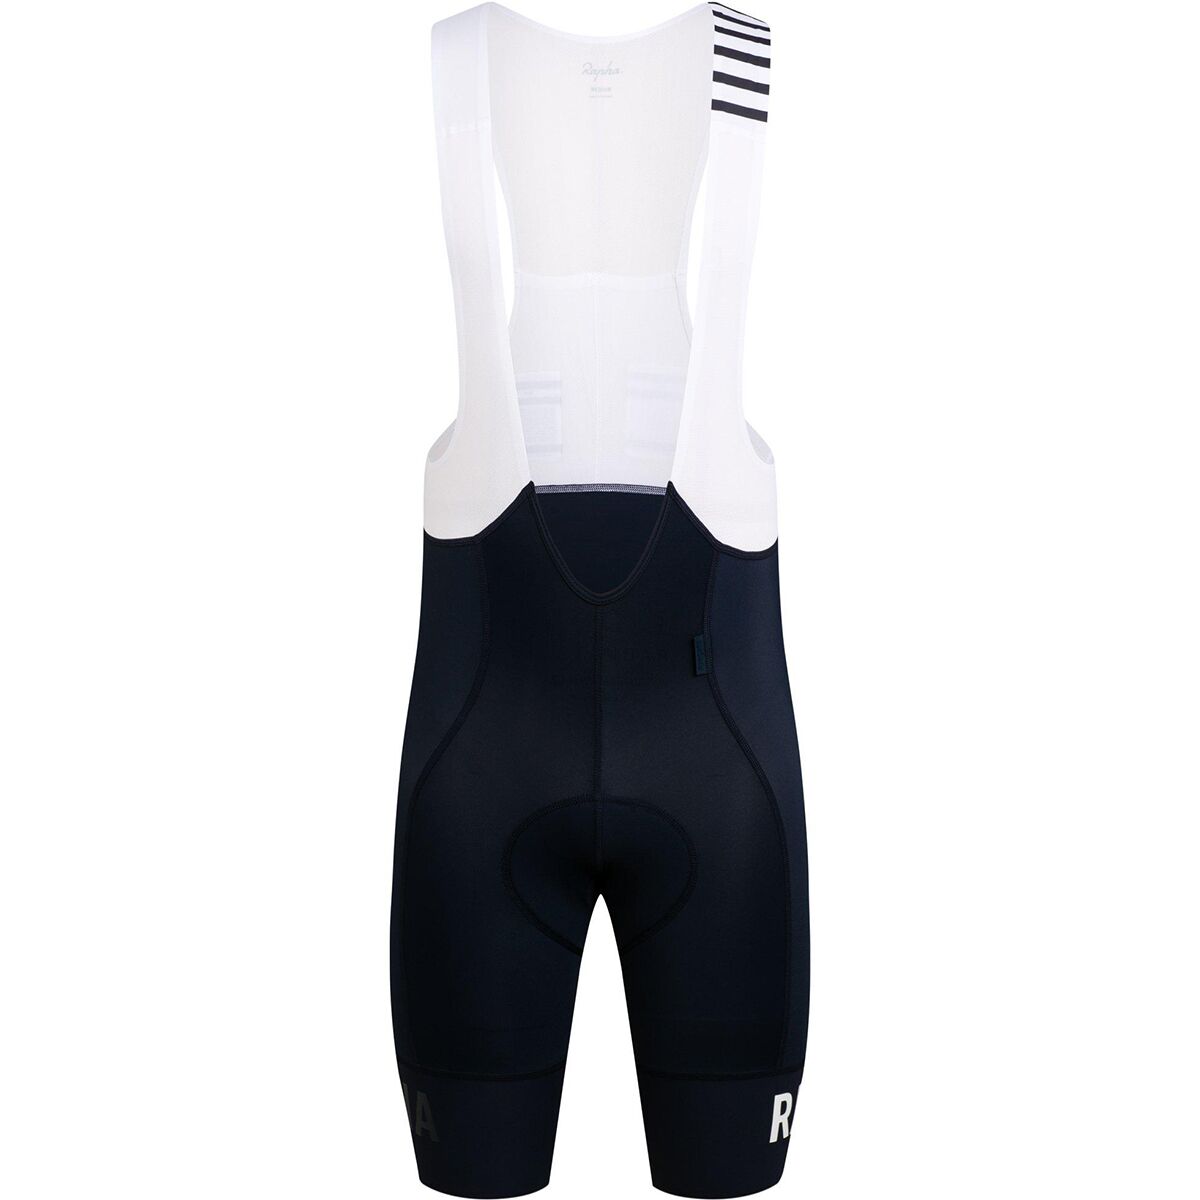 Rapha Pro Team Bib Shorts II - Men's Dark Navy/White, XL